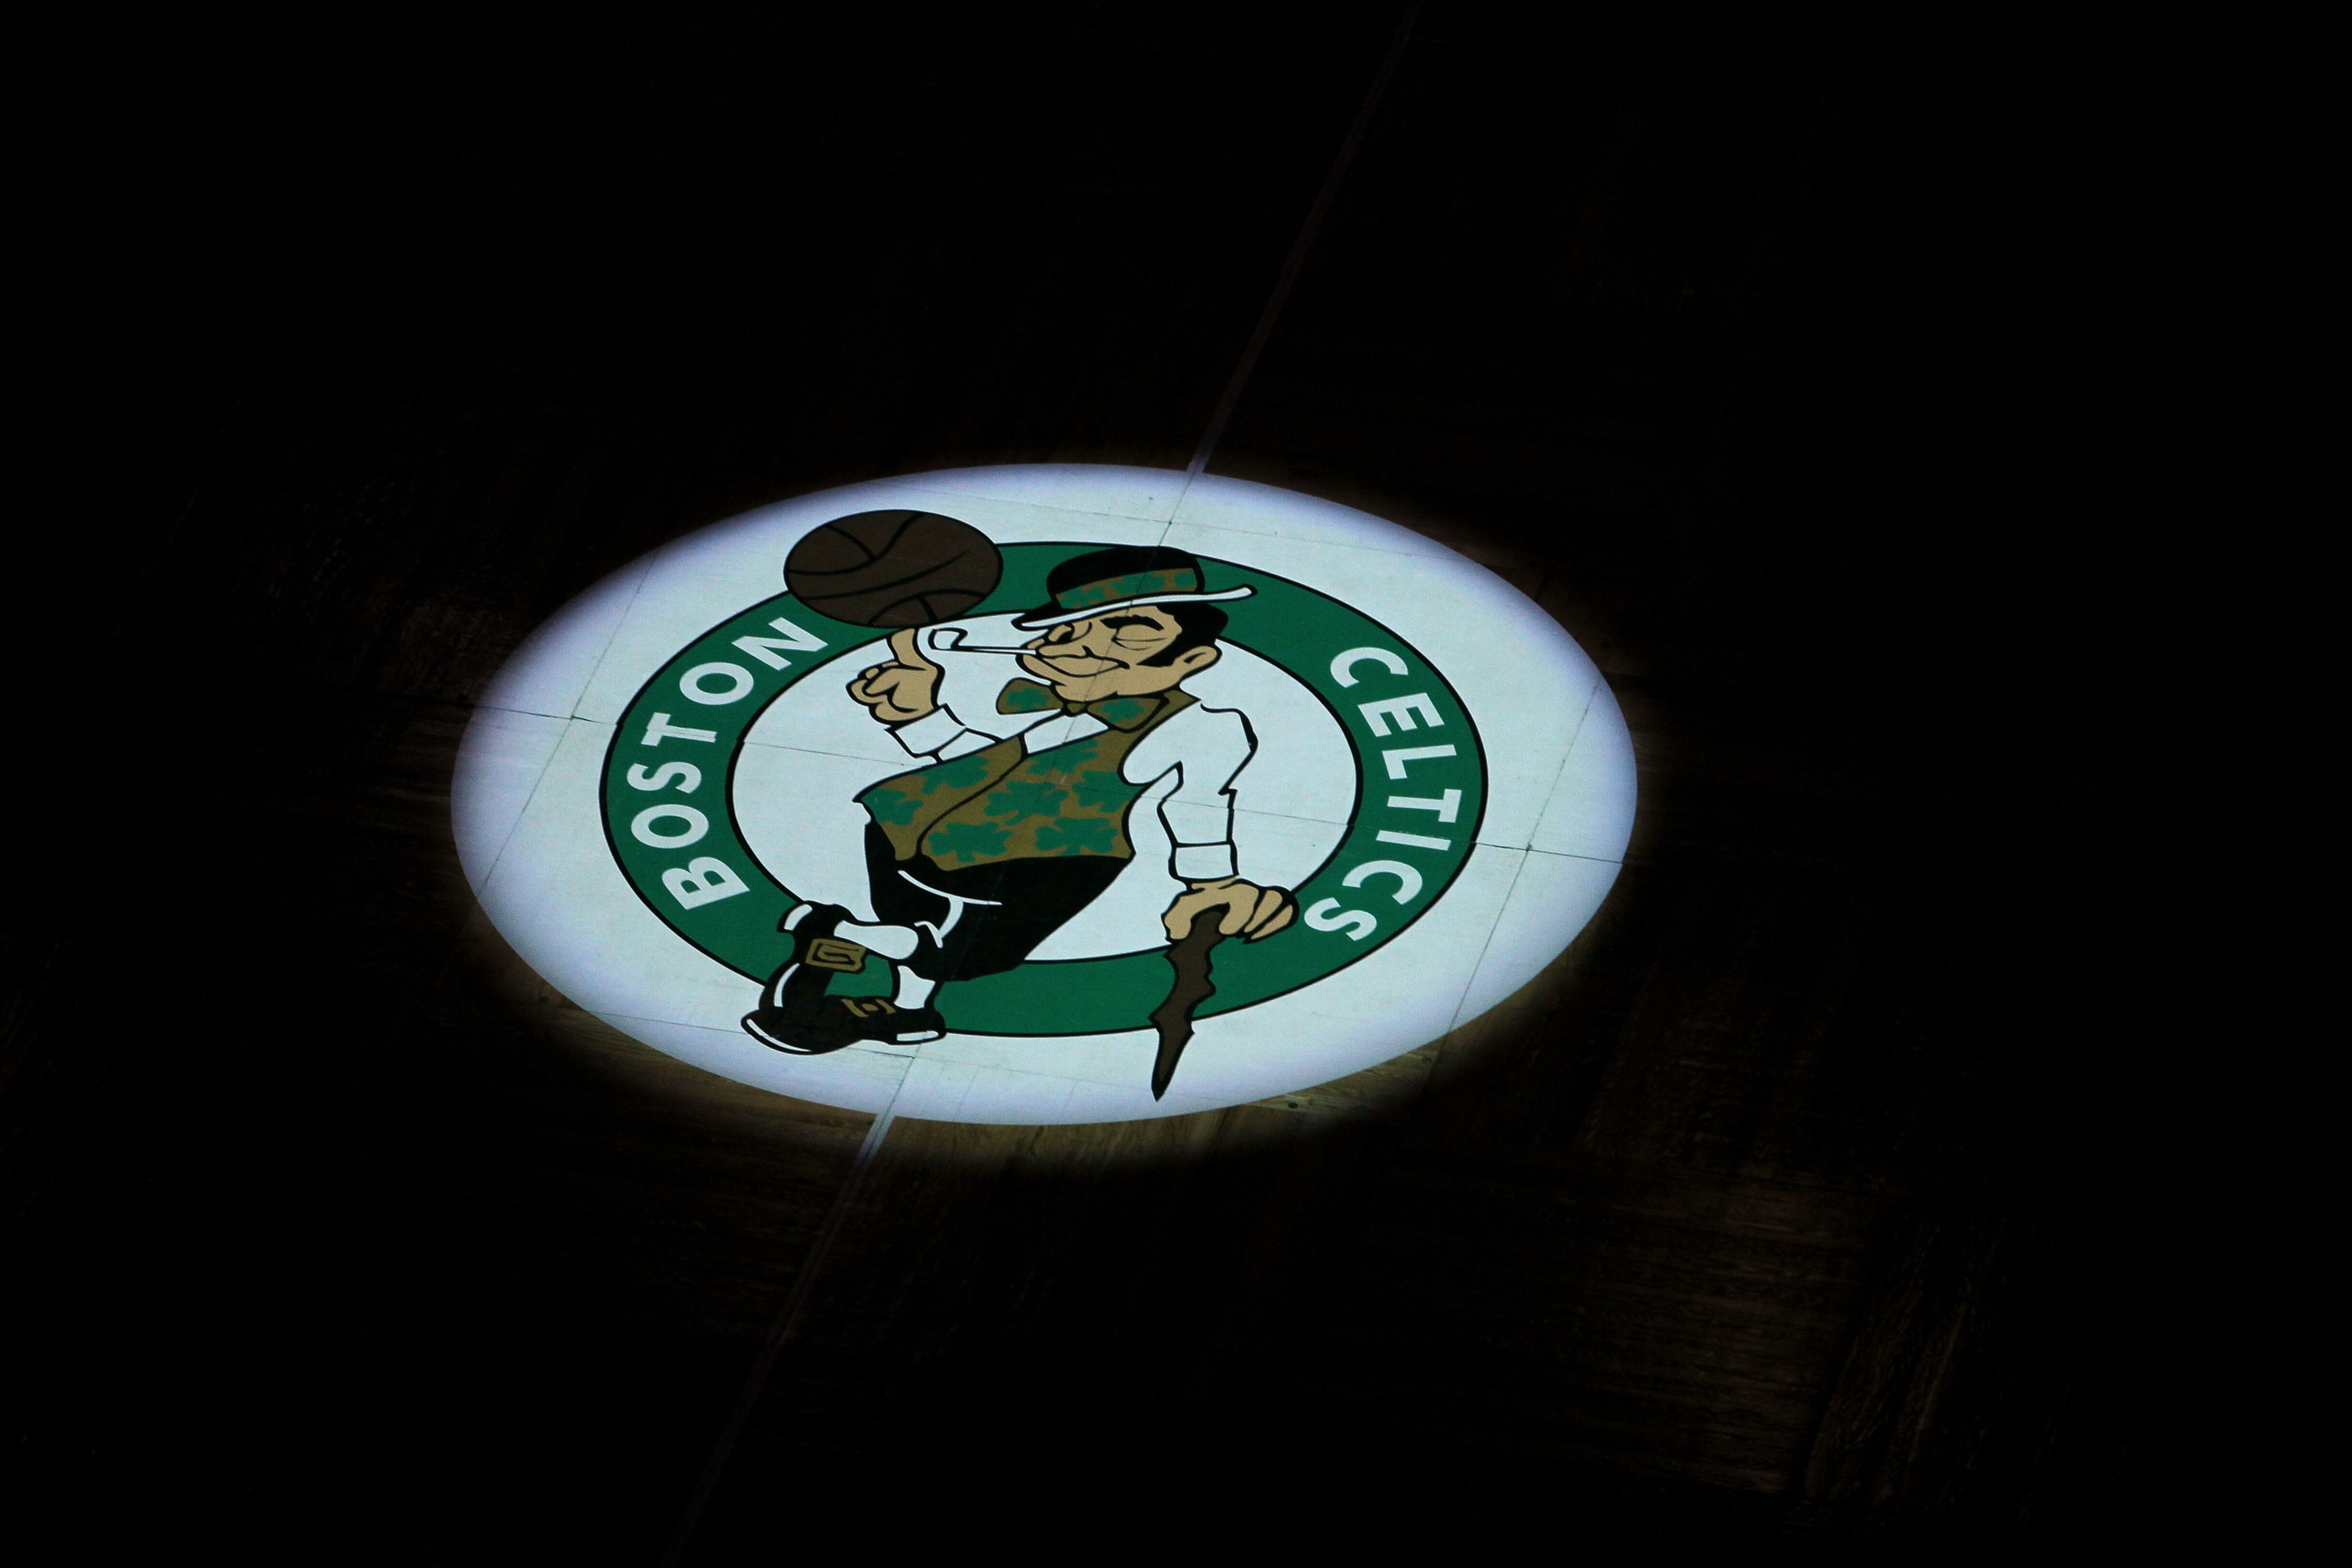 A detail of the Boston Celtics logo.